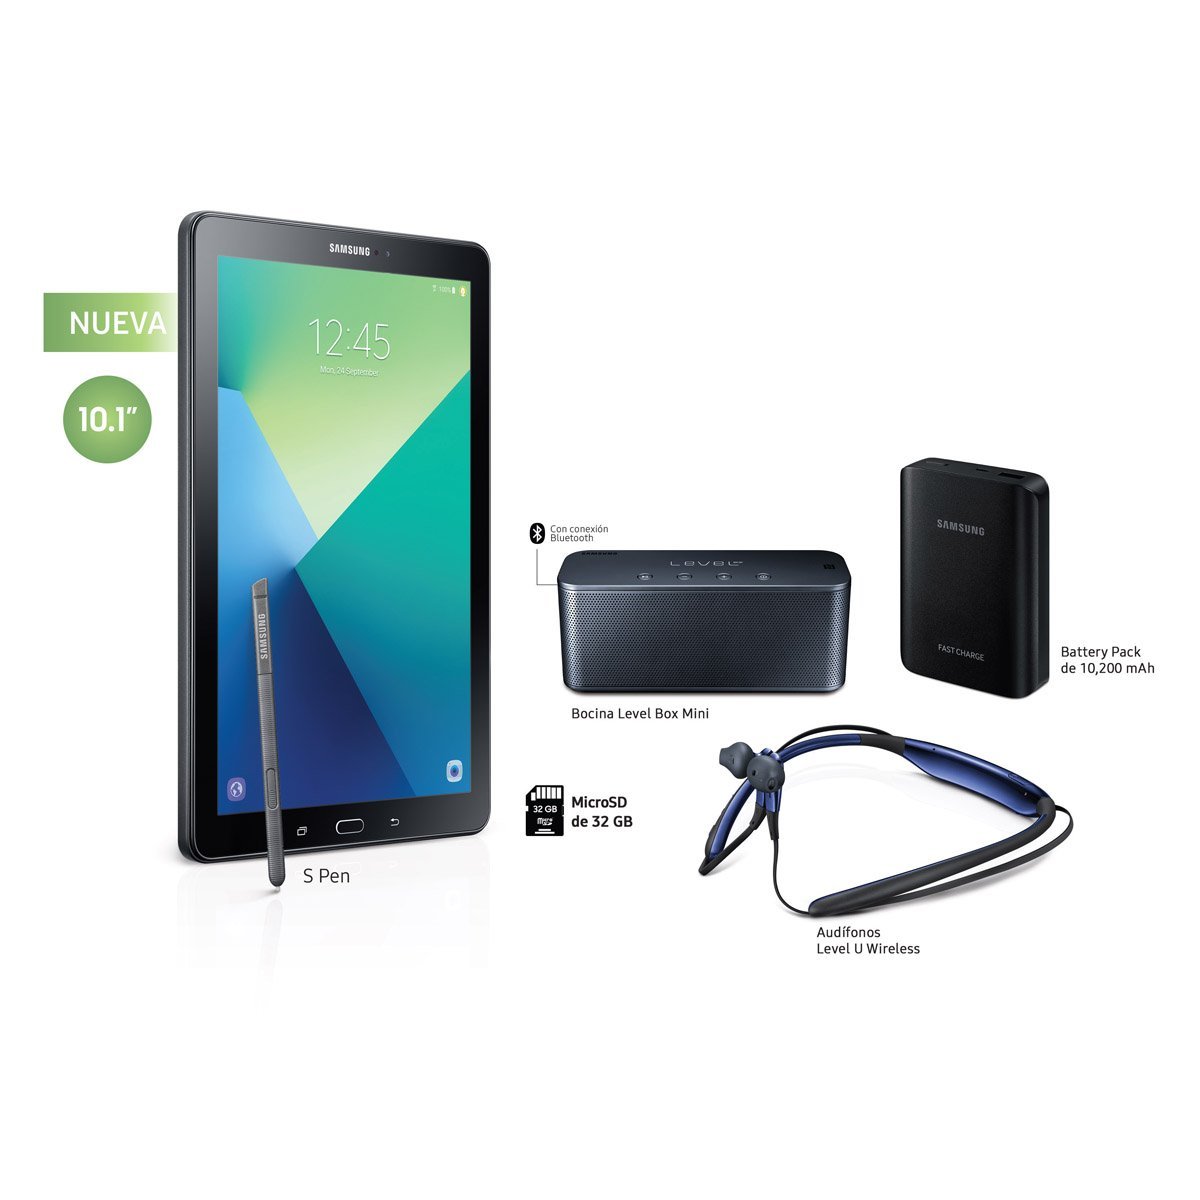 Galaxy Tab a 10.1 + Bocina Level Box + Audífonos Level U + Batería Portátil 10.2 Mha + Sd 32Gb